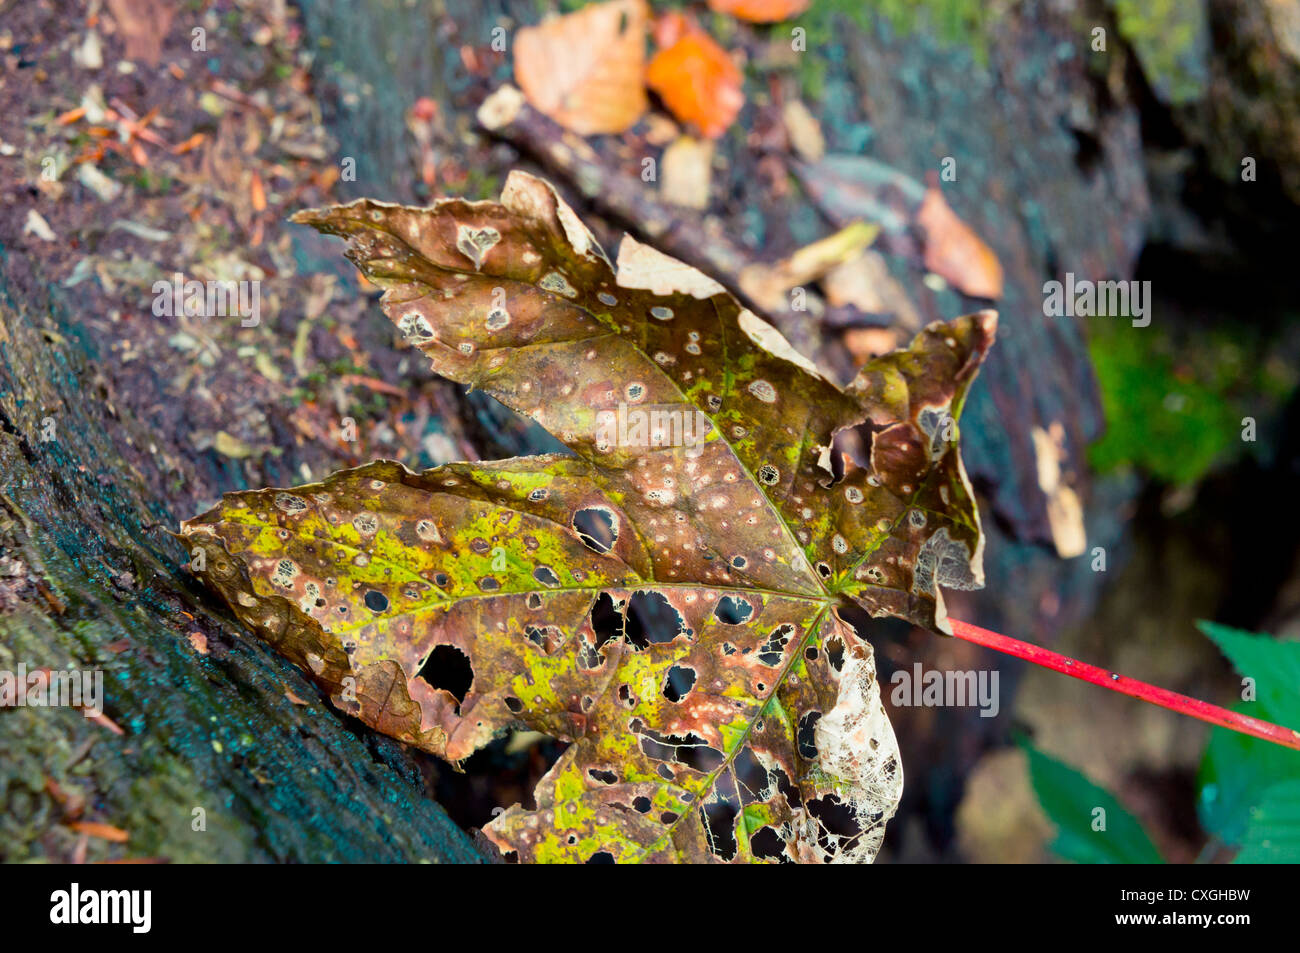 Autumn sycamore leaf Stock Photo